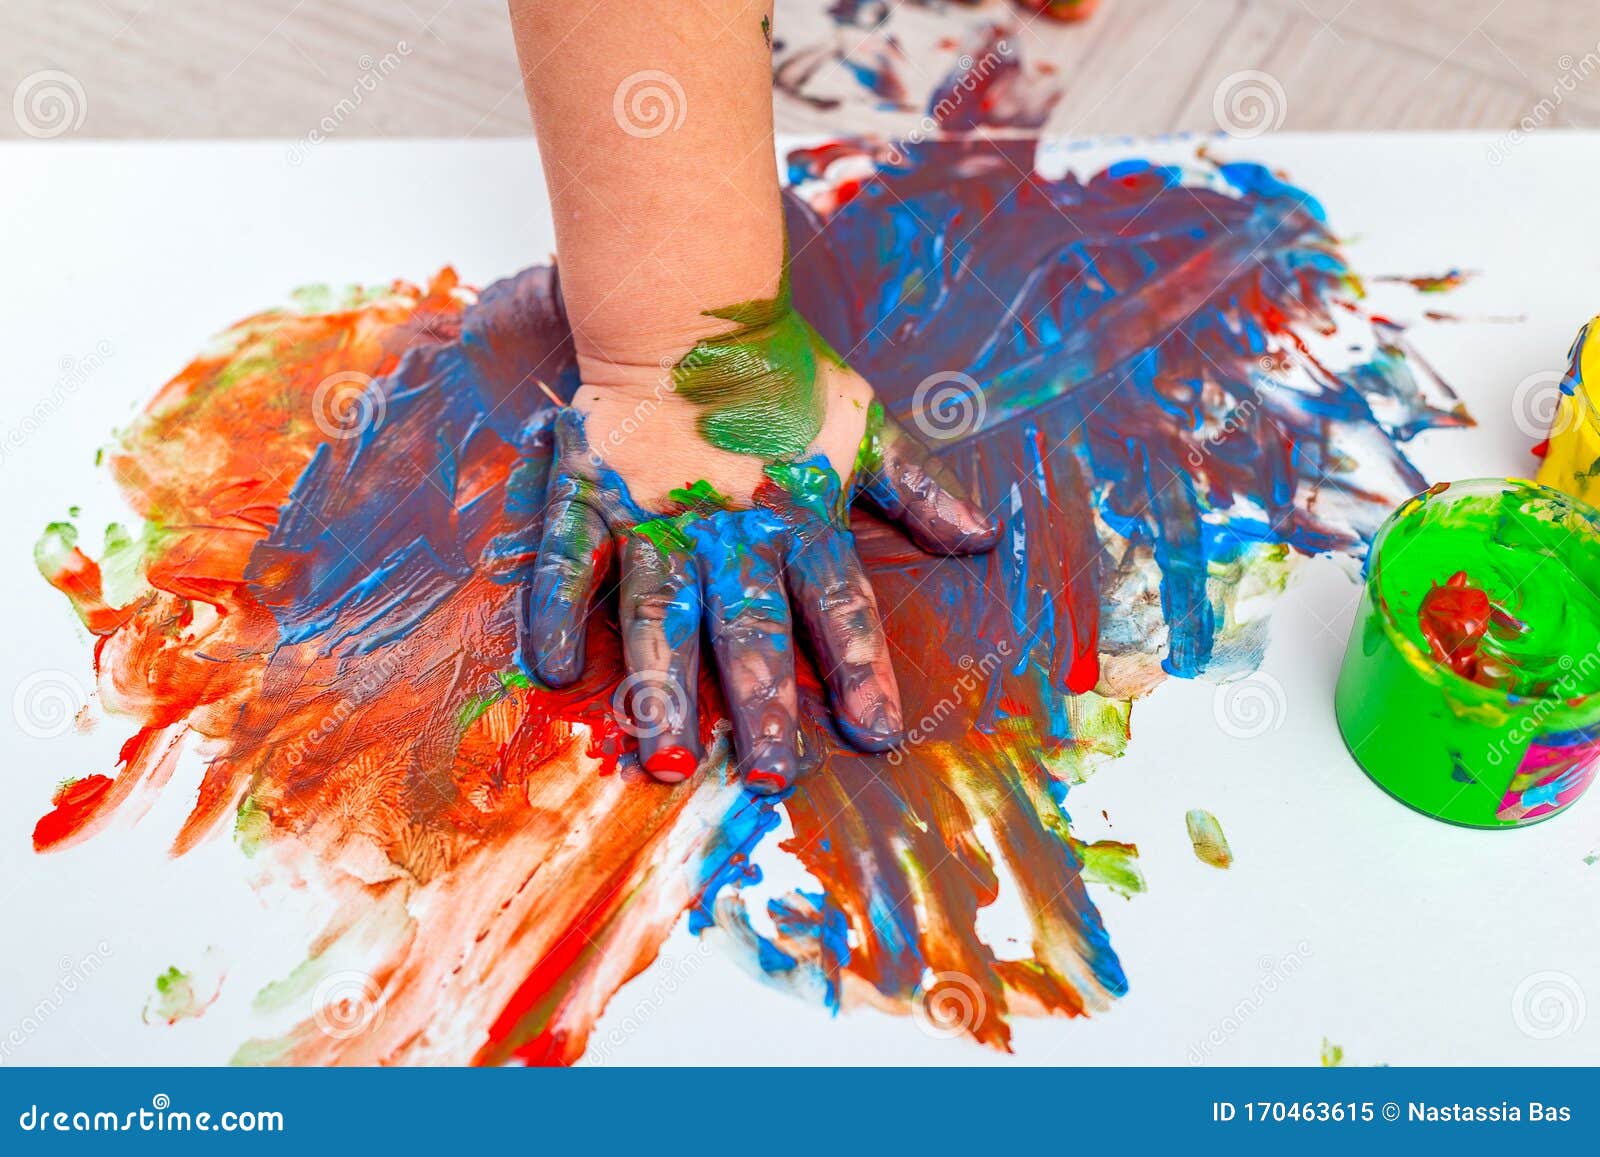 children`s hand in paints. finger paints. baby artwork . flat lay